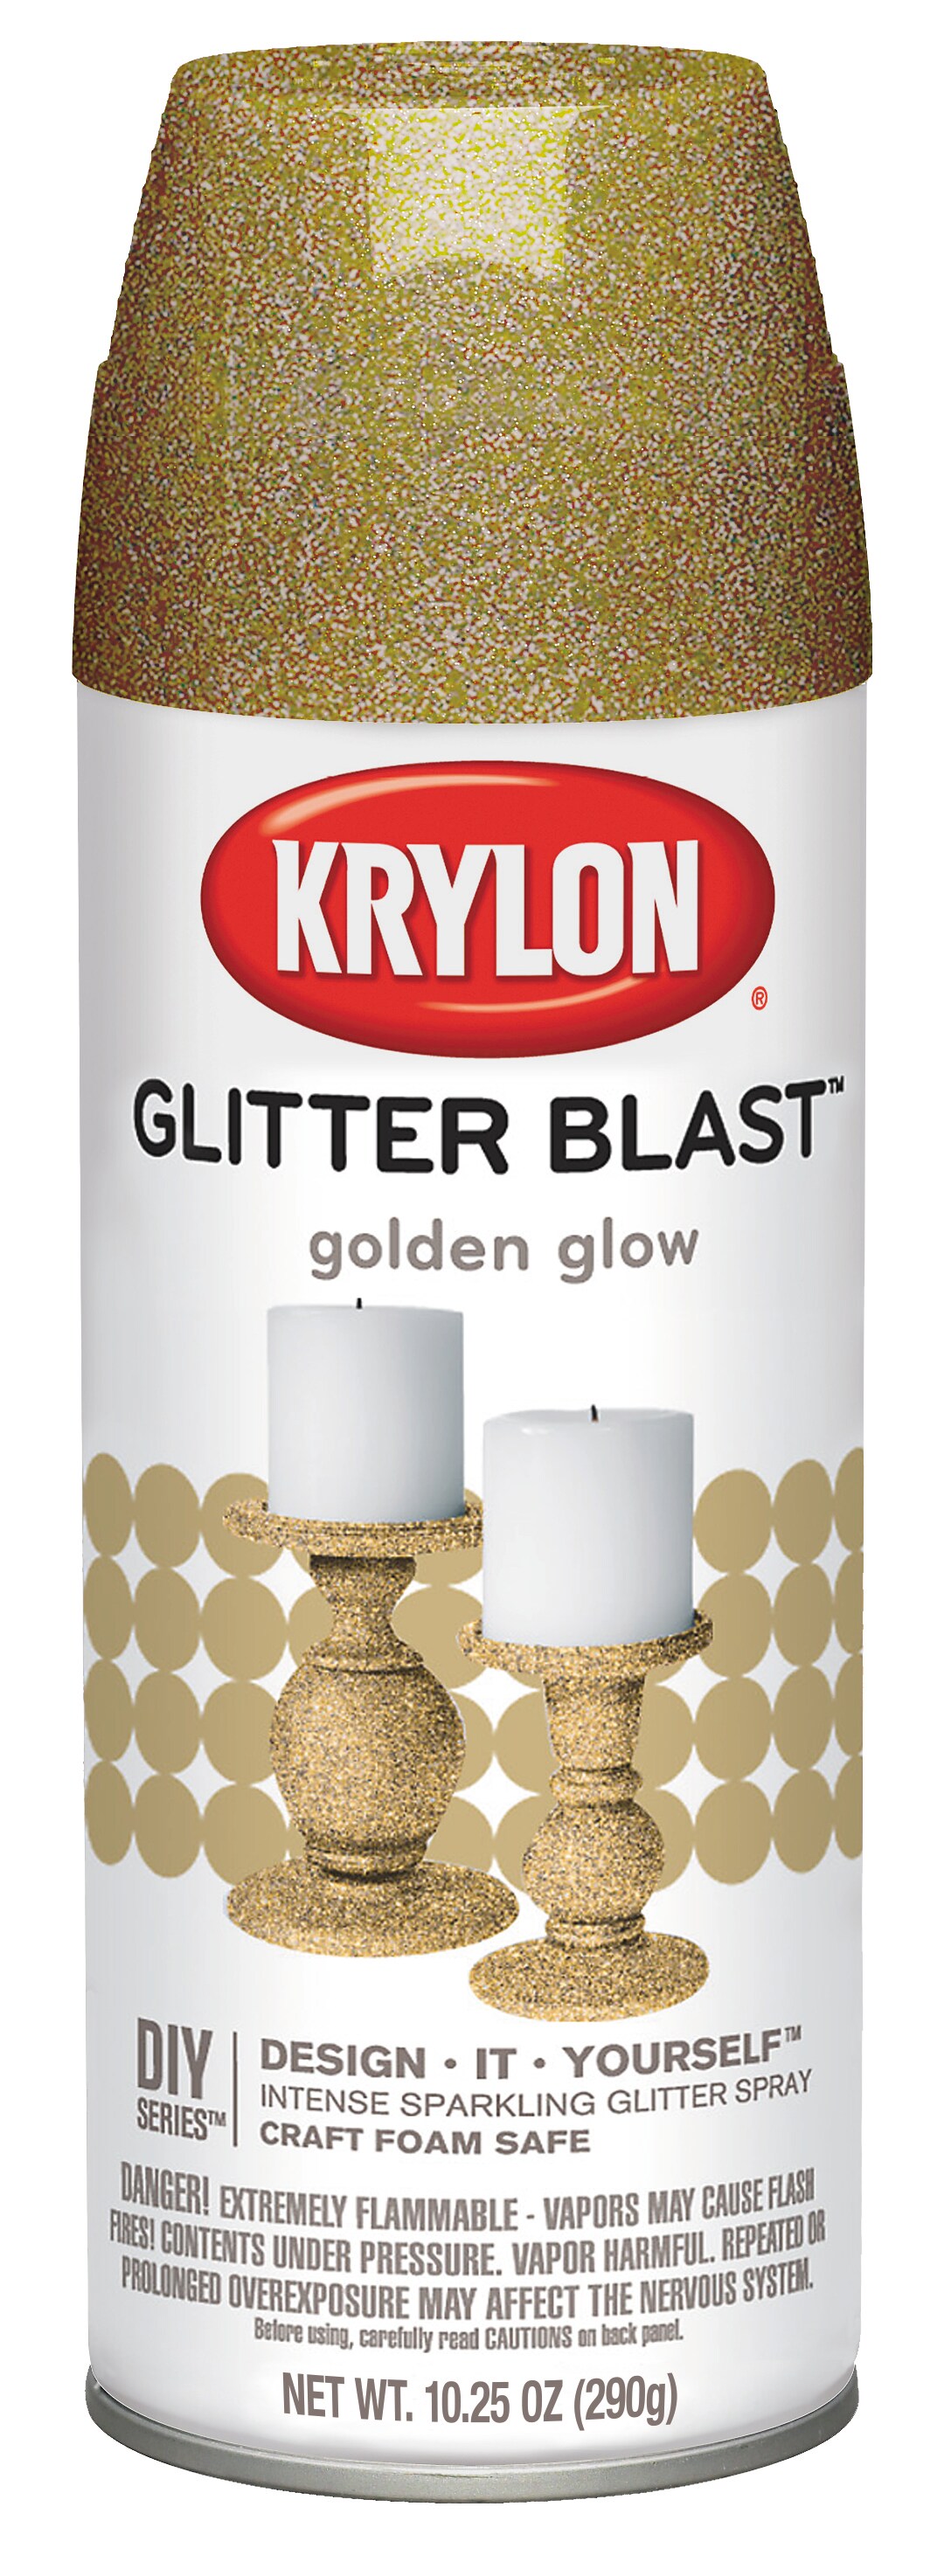  Krylon K03804A00 Glitter Blast Glitter Spray Paint for Craft  Projects, Diamond Dust, 5.75 oz : Arts, Crafts & Sewing